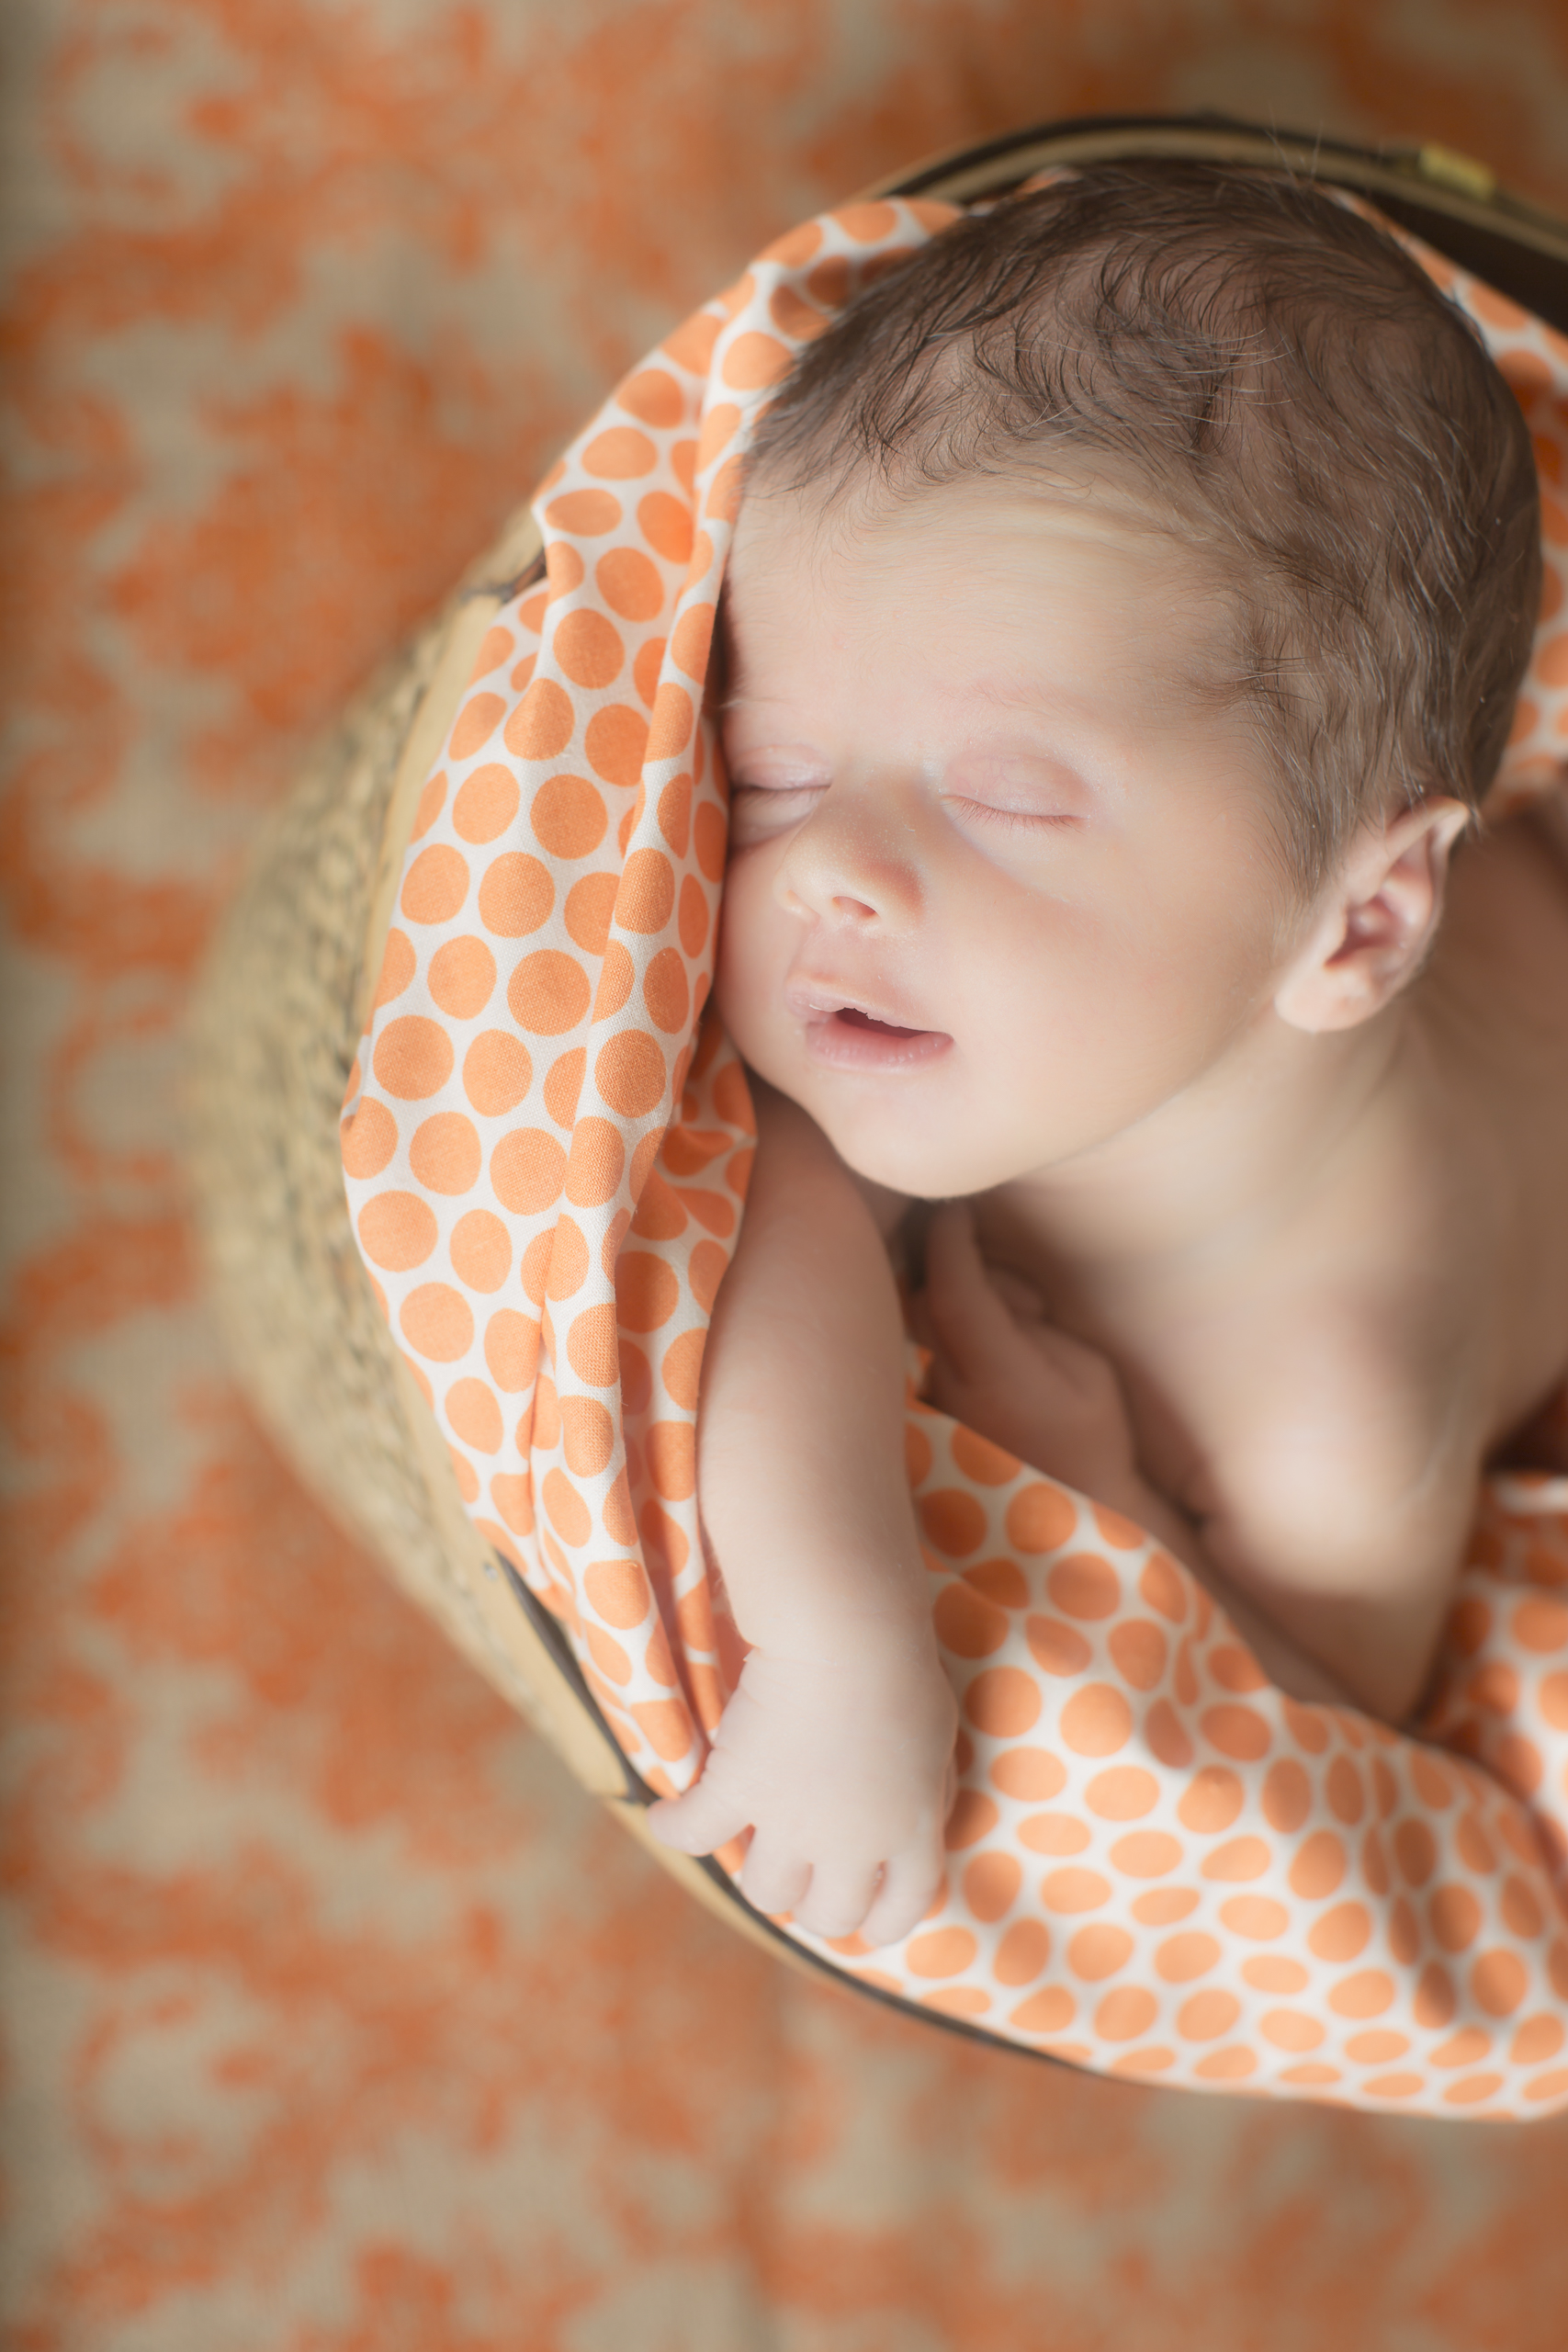 15 orange polka dot modern newborn boy photography in straw basket with burlap background studio session.jpg